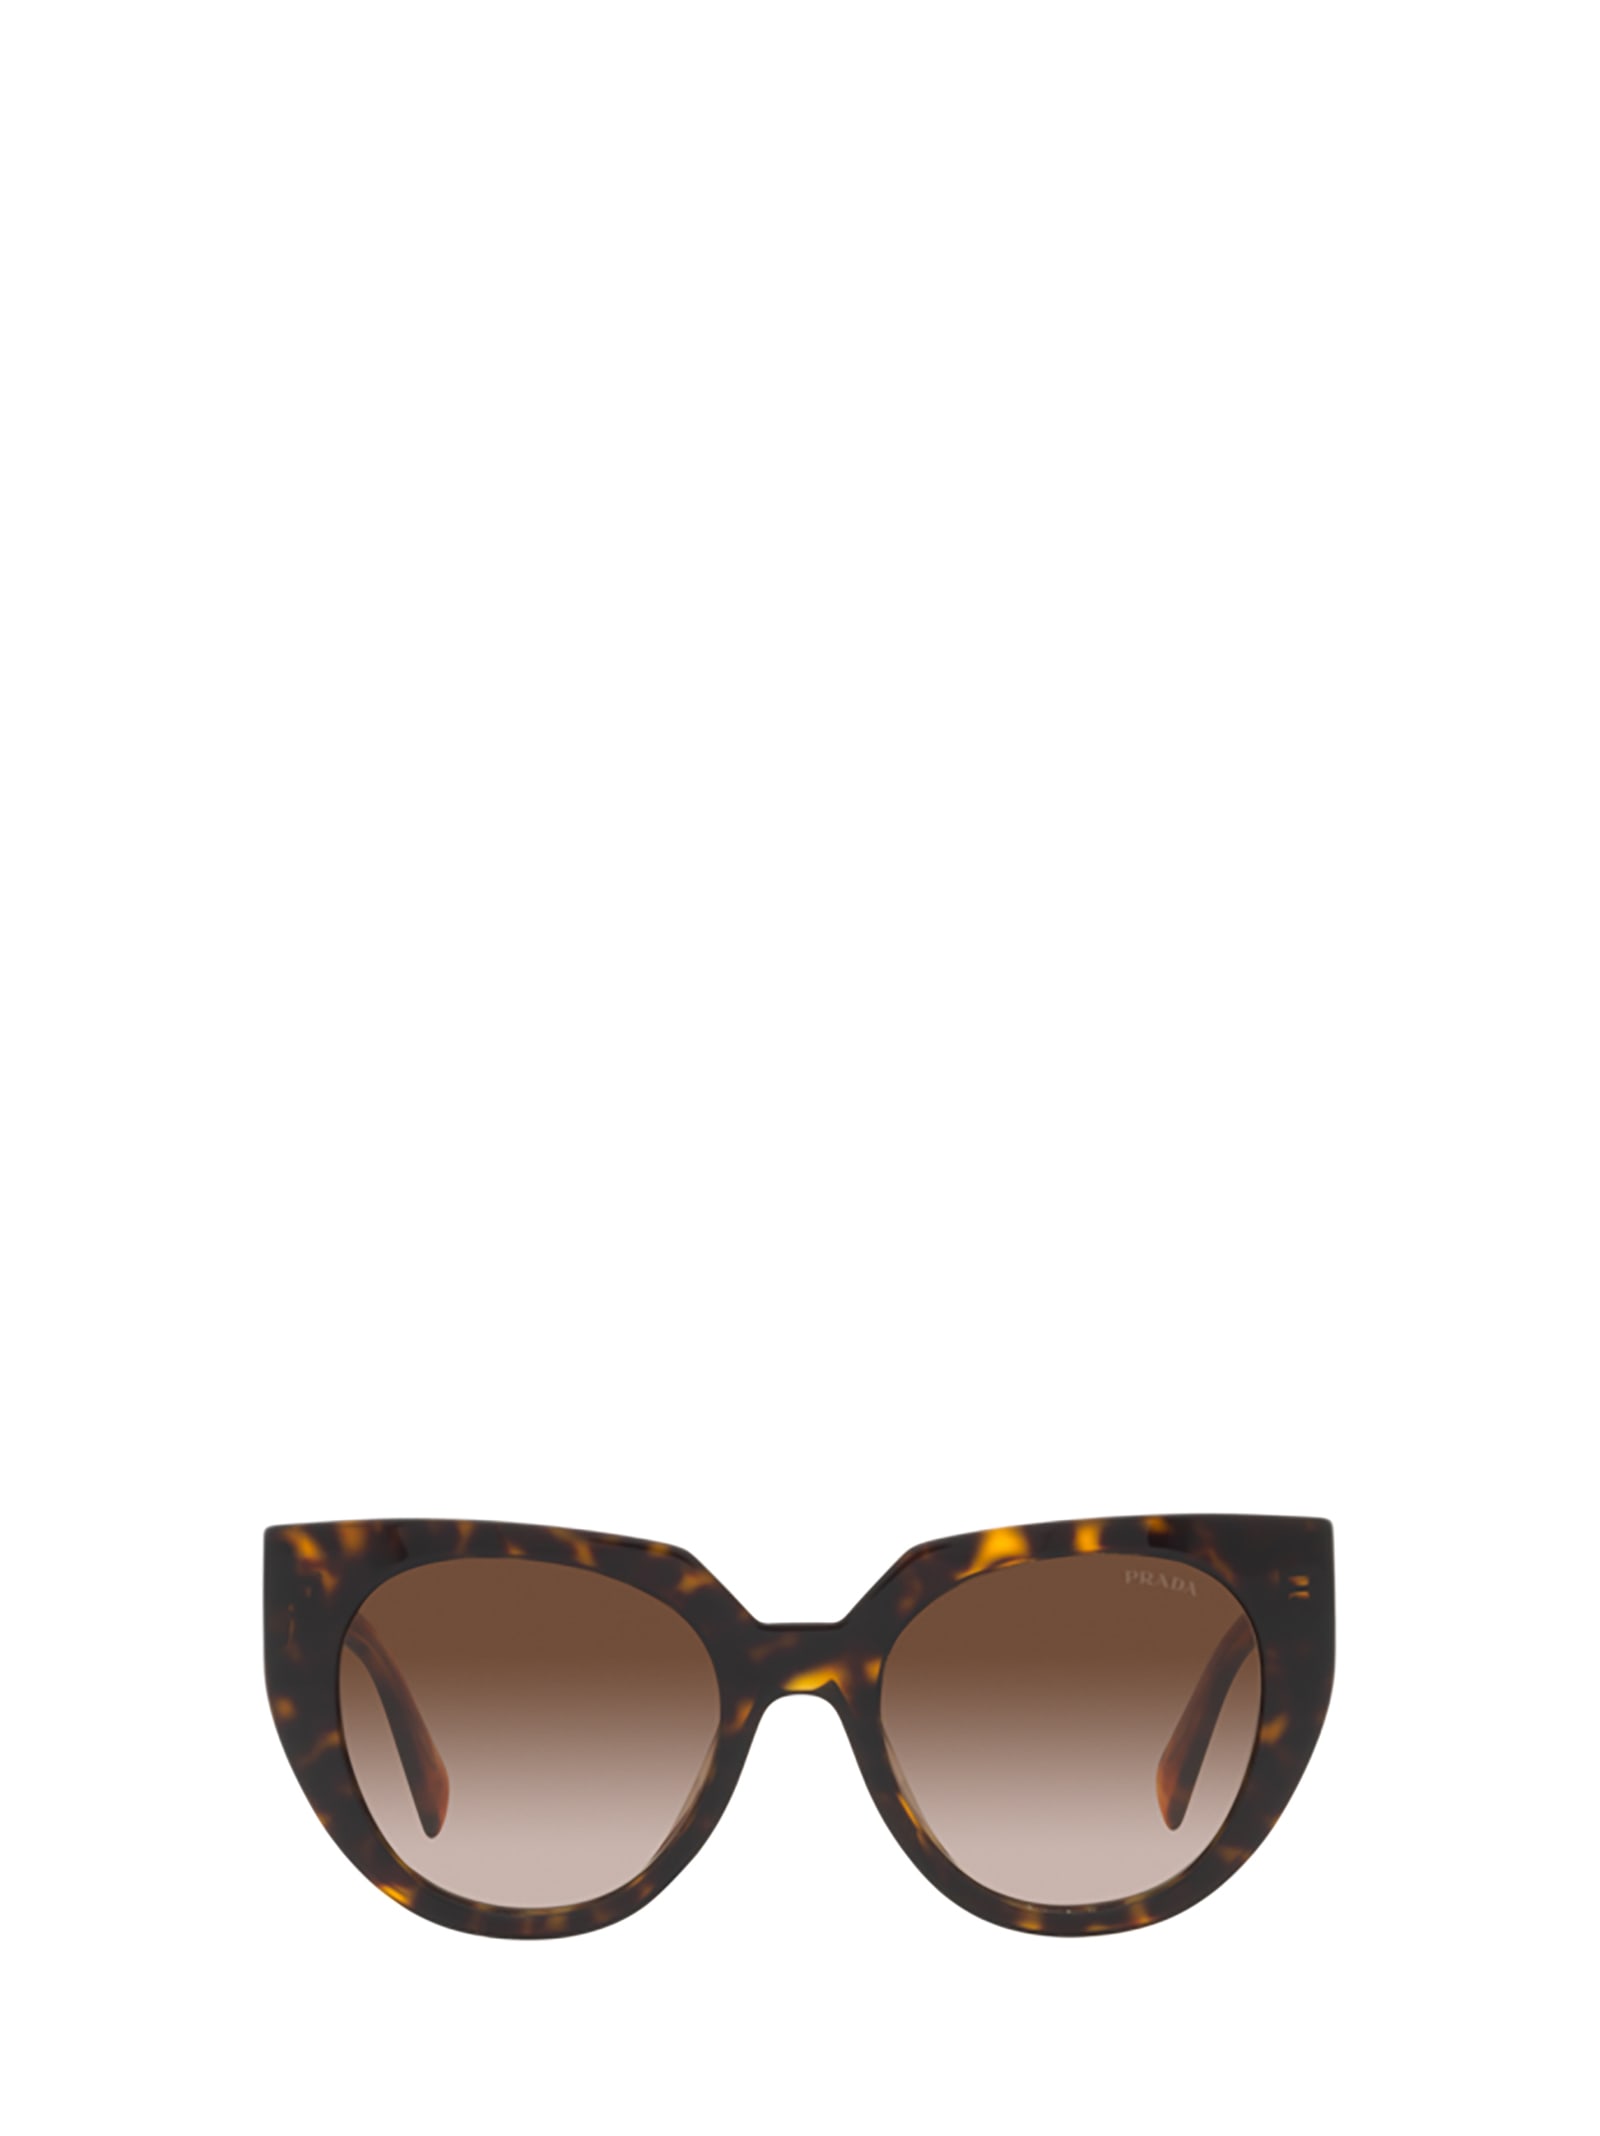 Prada Eyewear Pr 14ws Tortoise Sunglasses